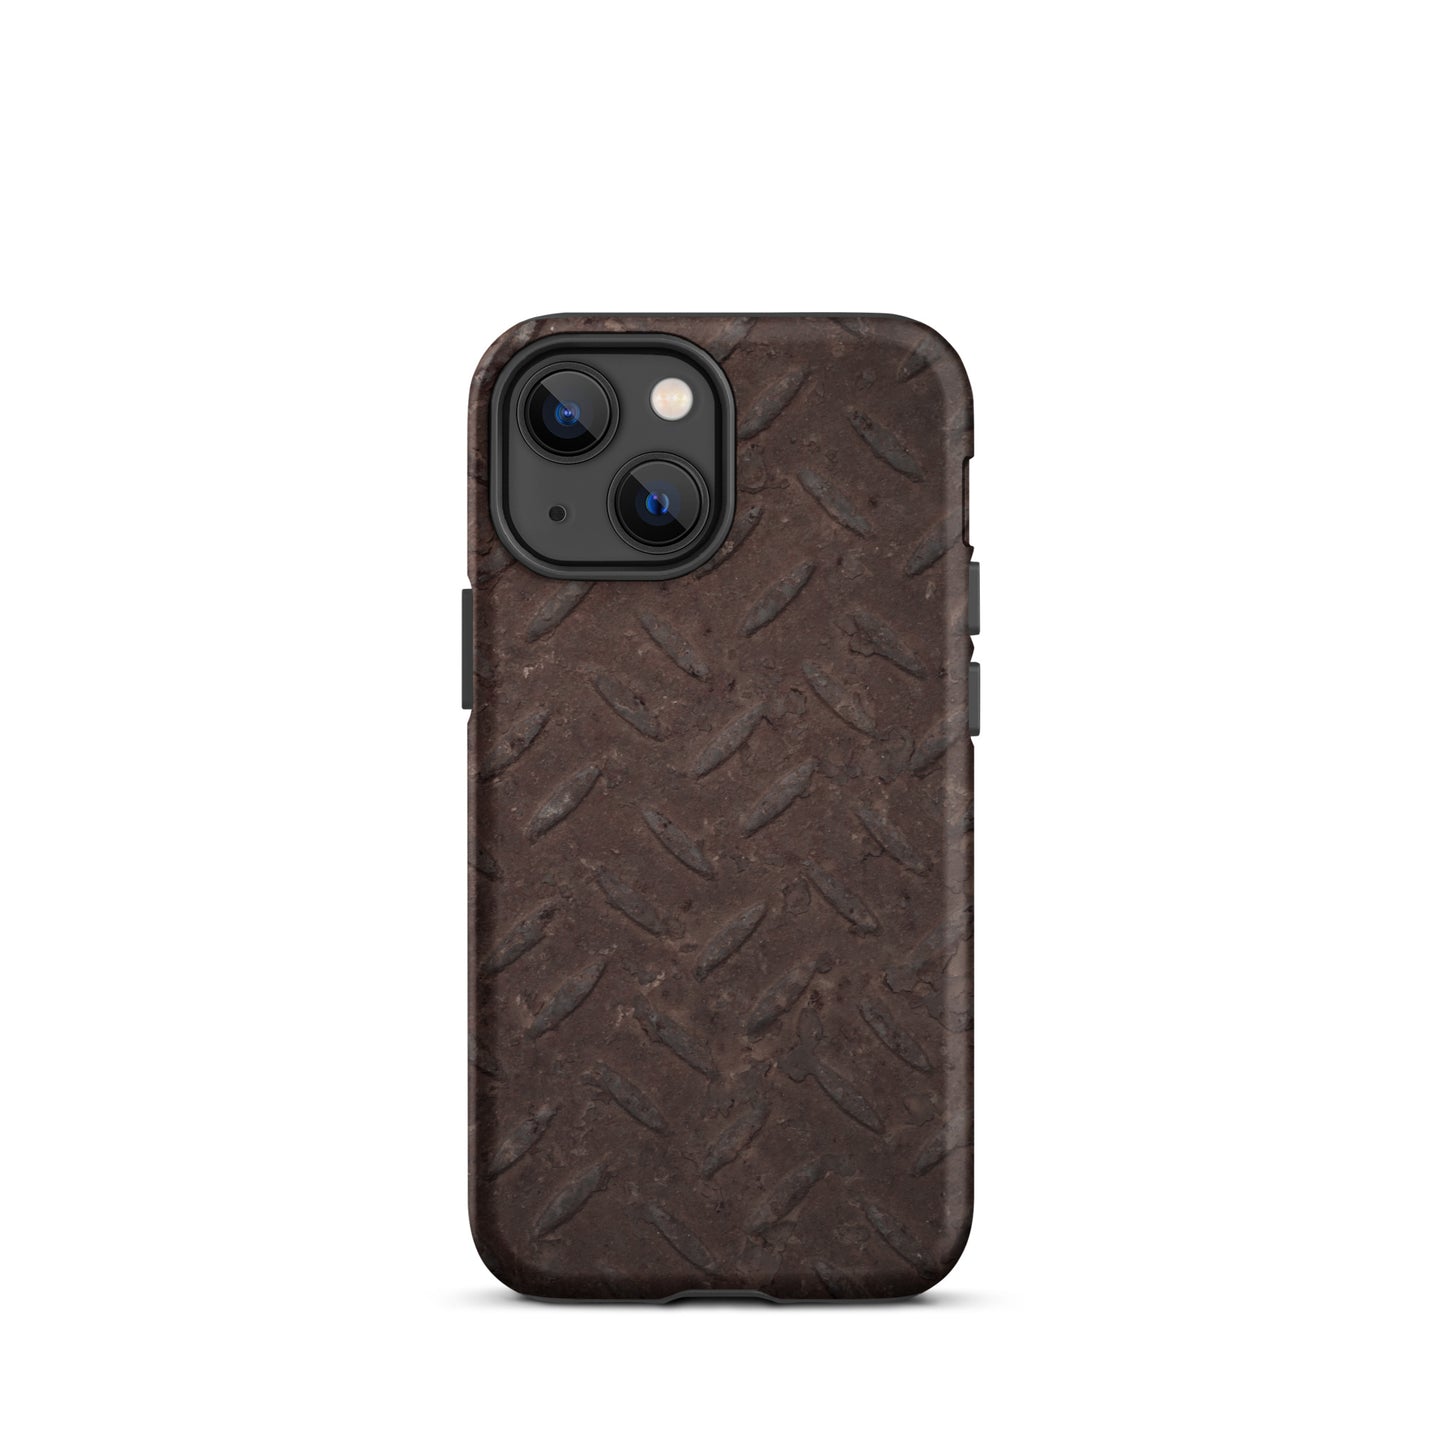 Rusty Metal Tough iPhone case